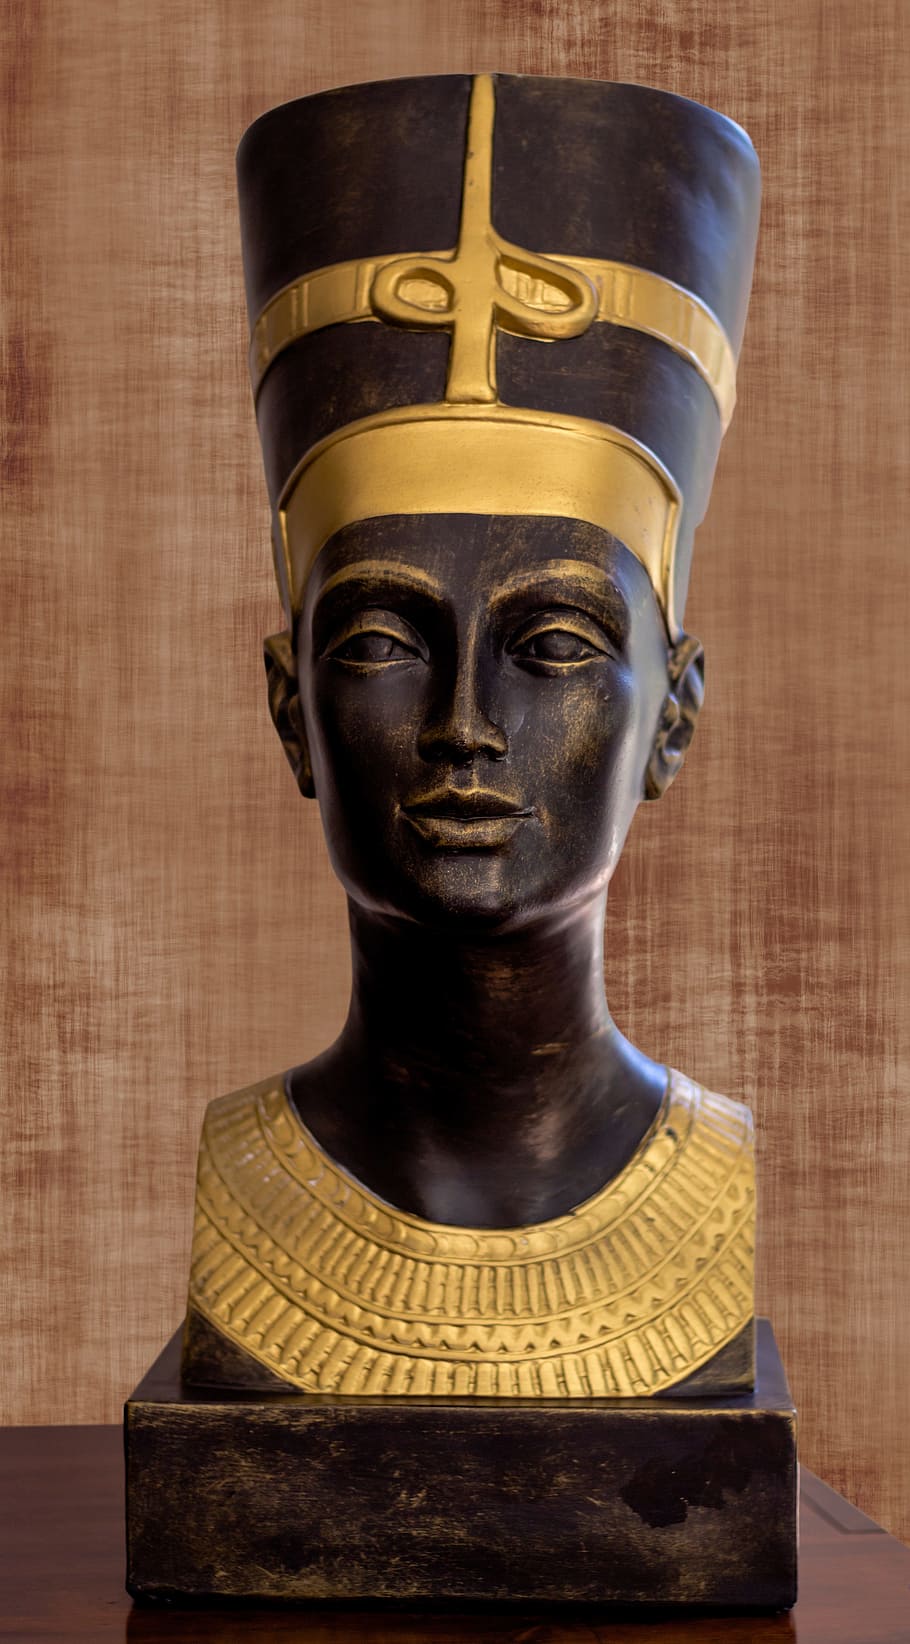 Egypt, Nefertiti, Figure, Sculpture, statue, gold, gold colored, history, front view, human representation